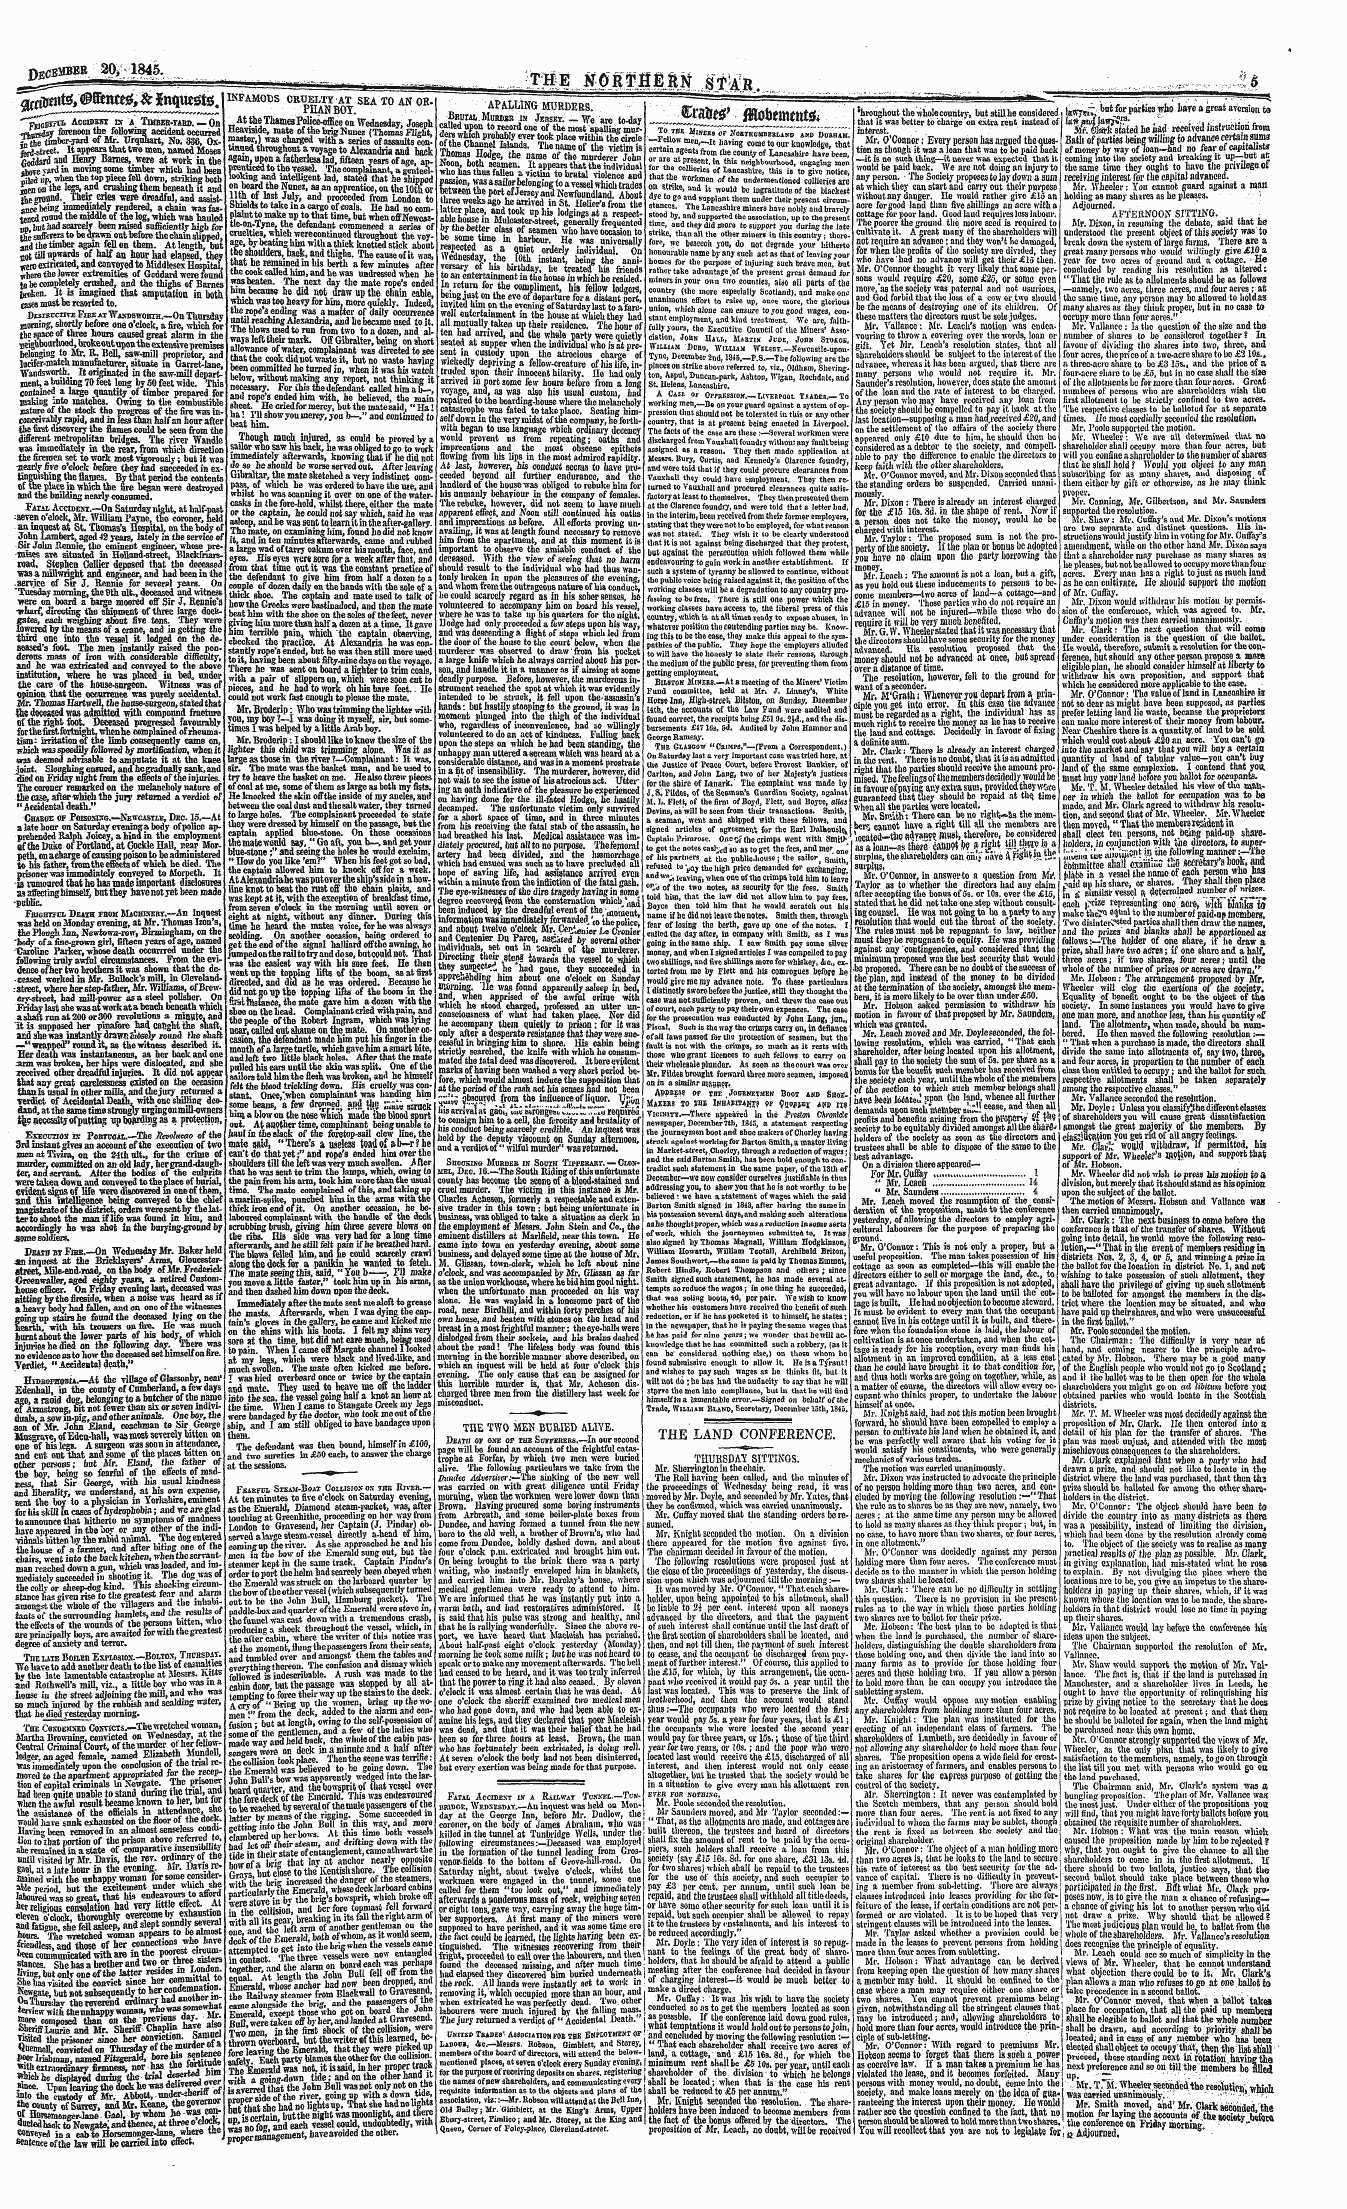 Northern Star (1837-1852): jS F Y, 4th edition: 5